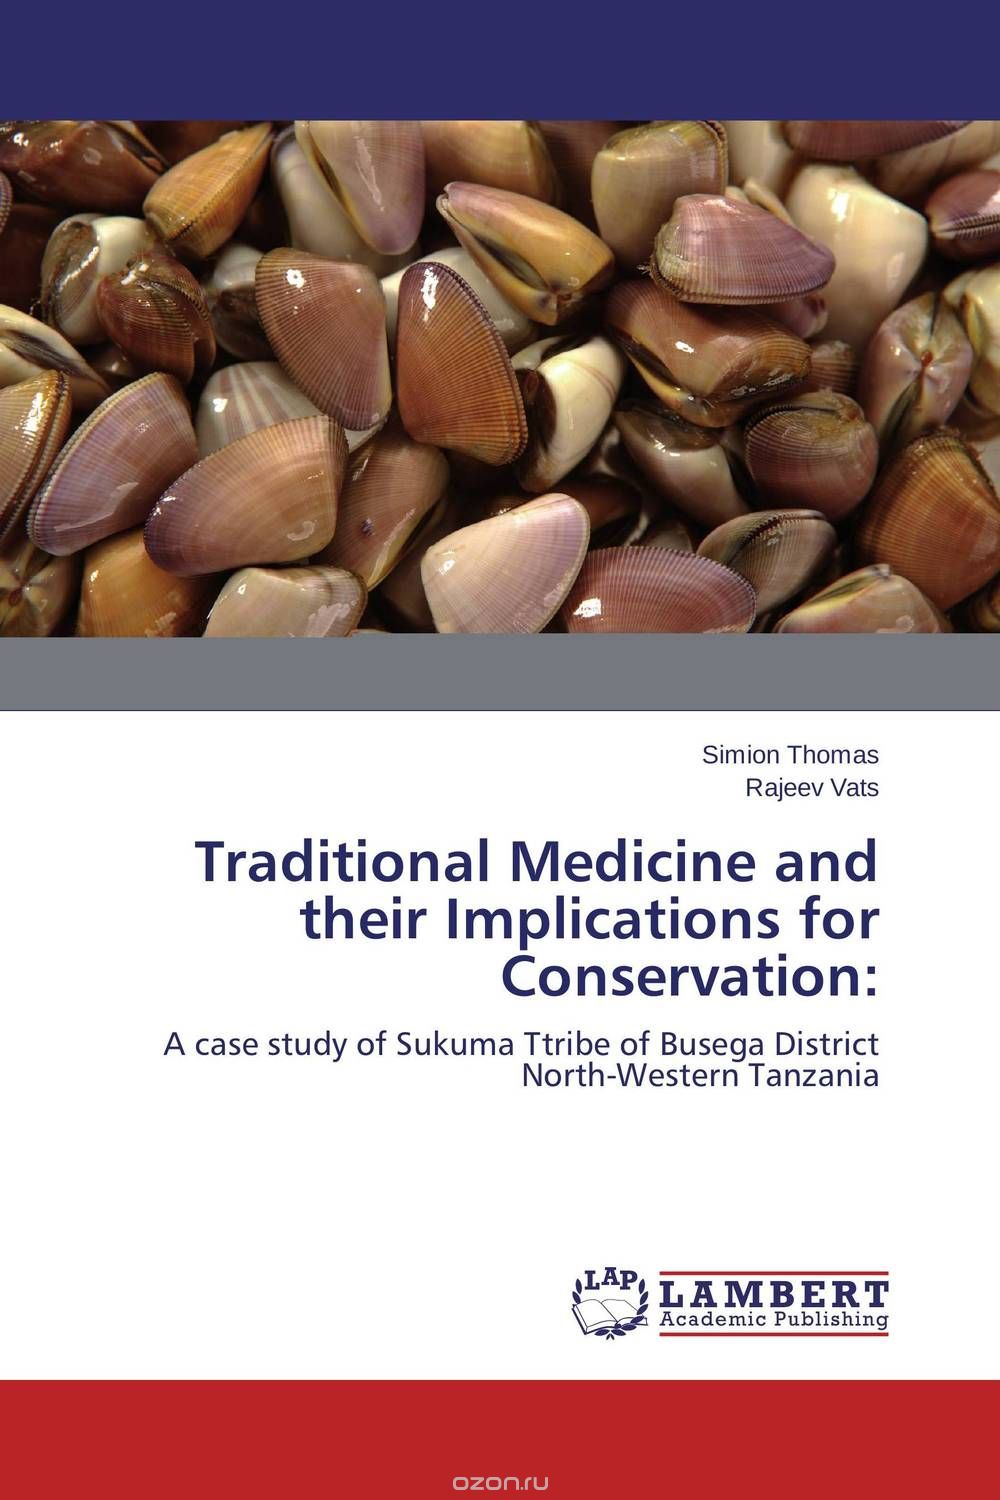 Скачать книгу "Traditional Medicine and their Implications for Conservation"